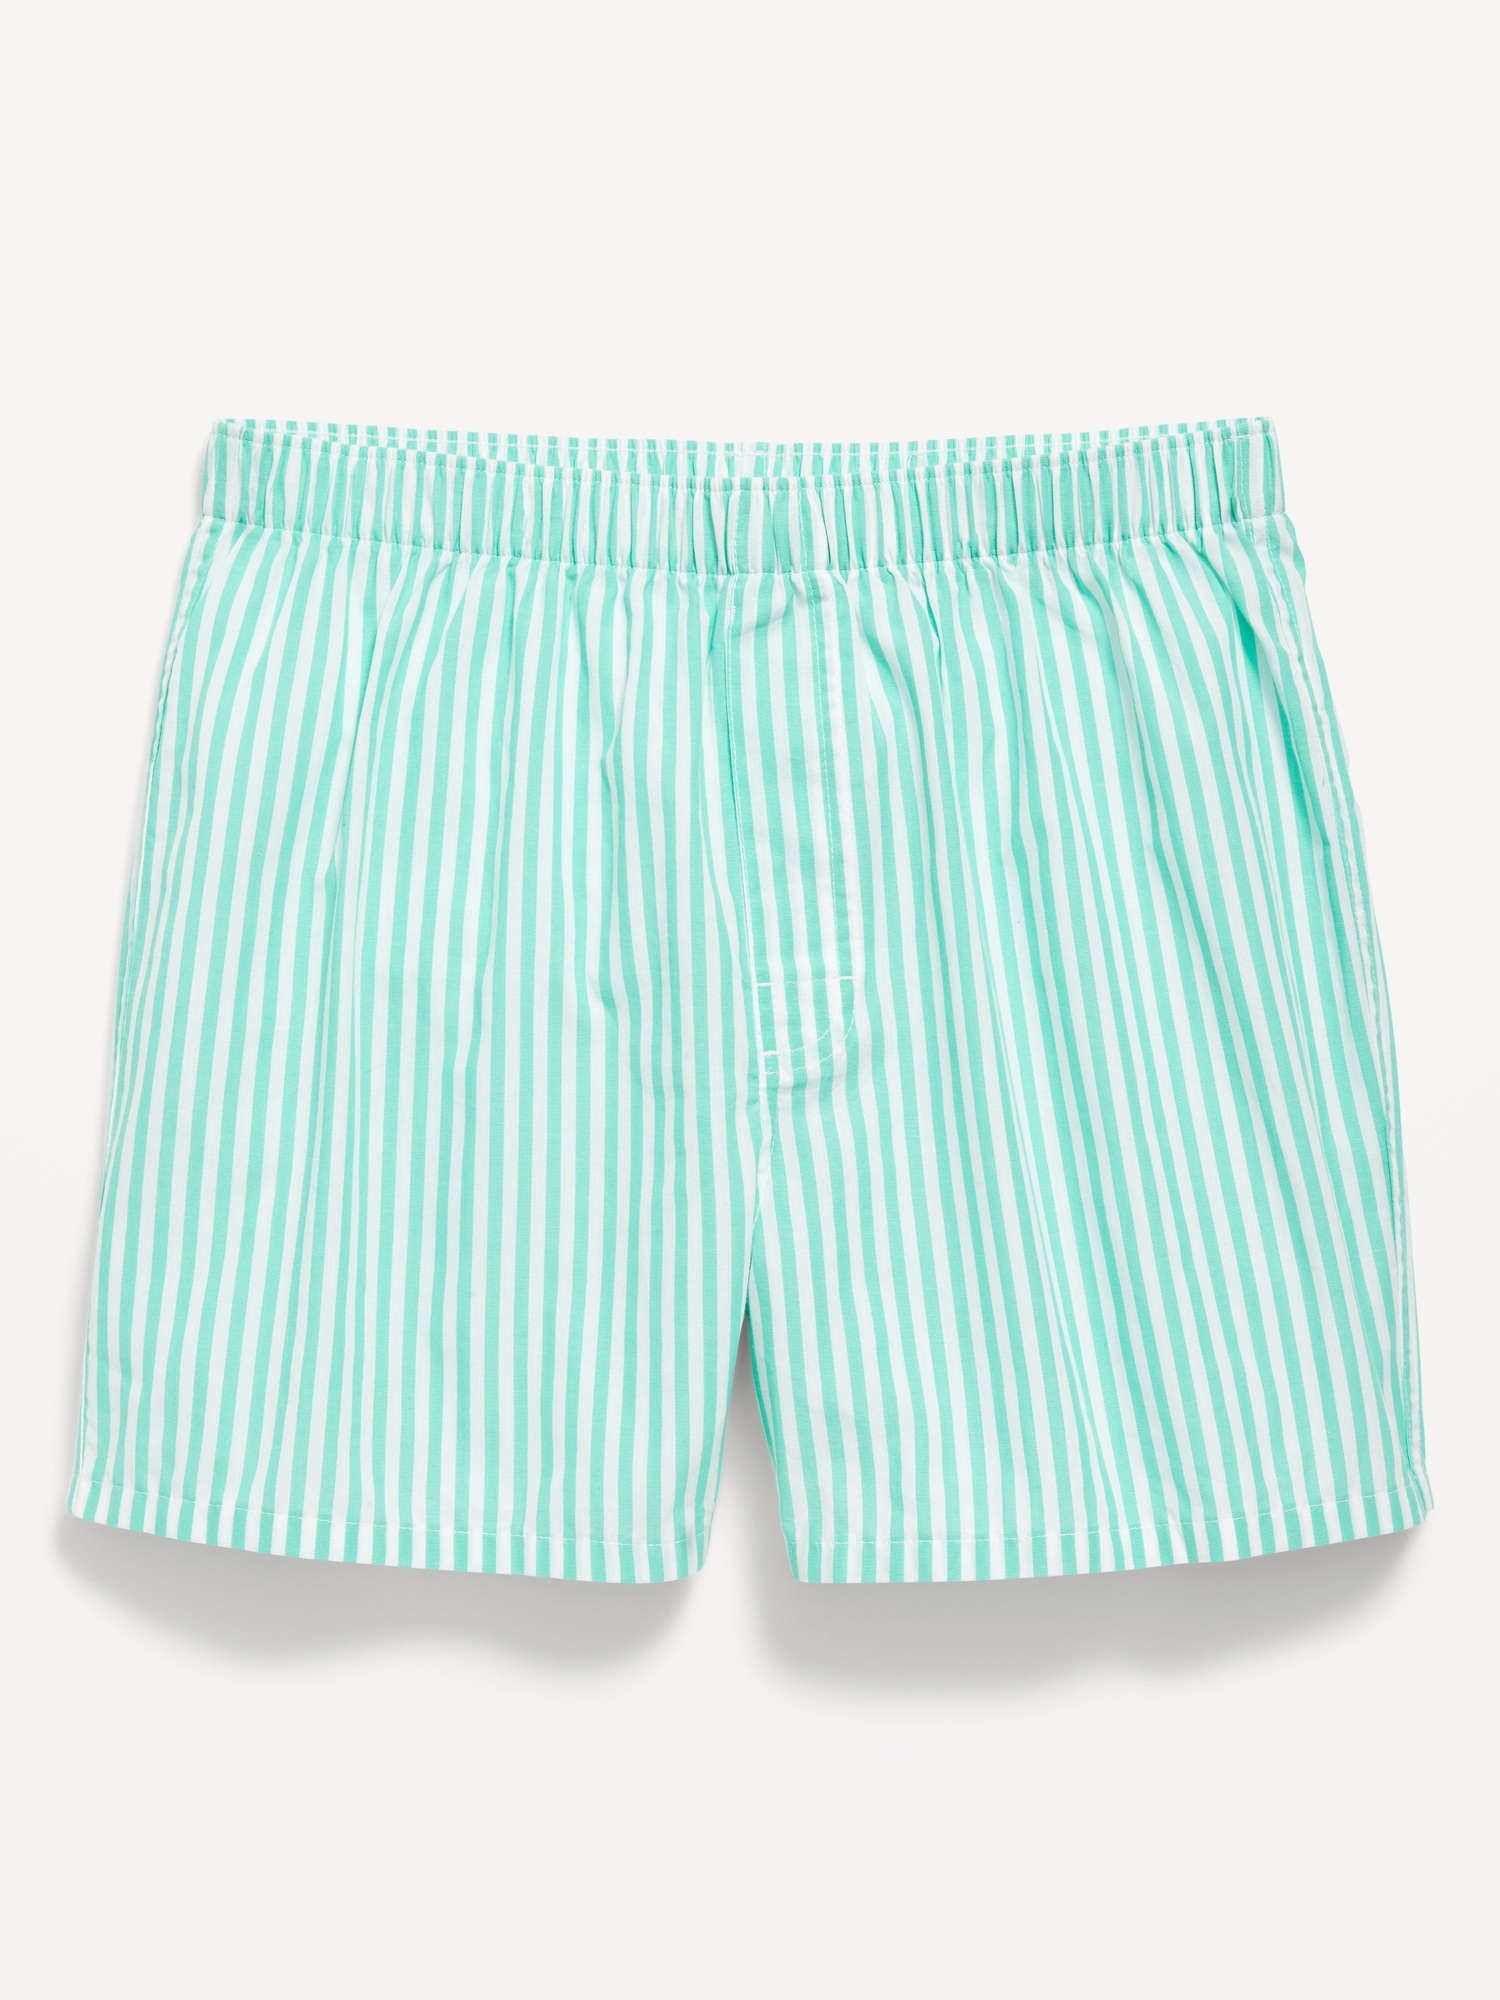 Soft-Washed Boxer Shorts -- 3.75-inch